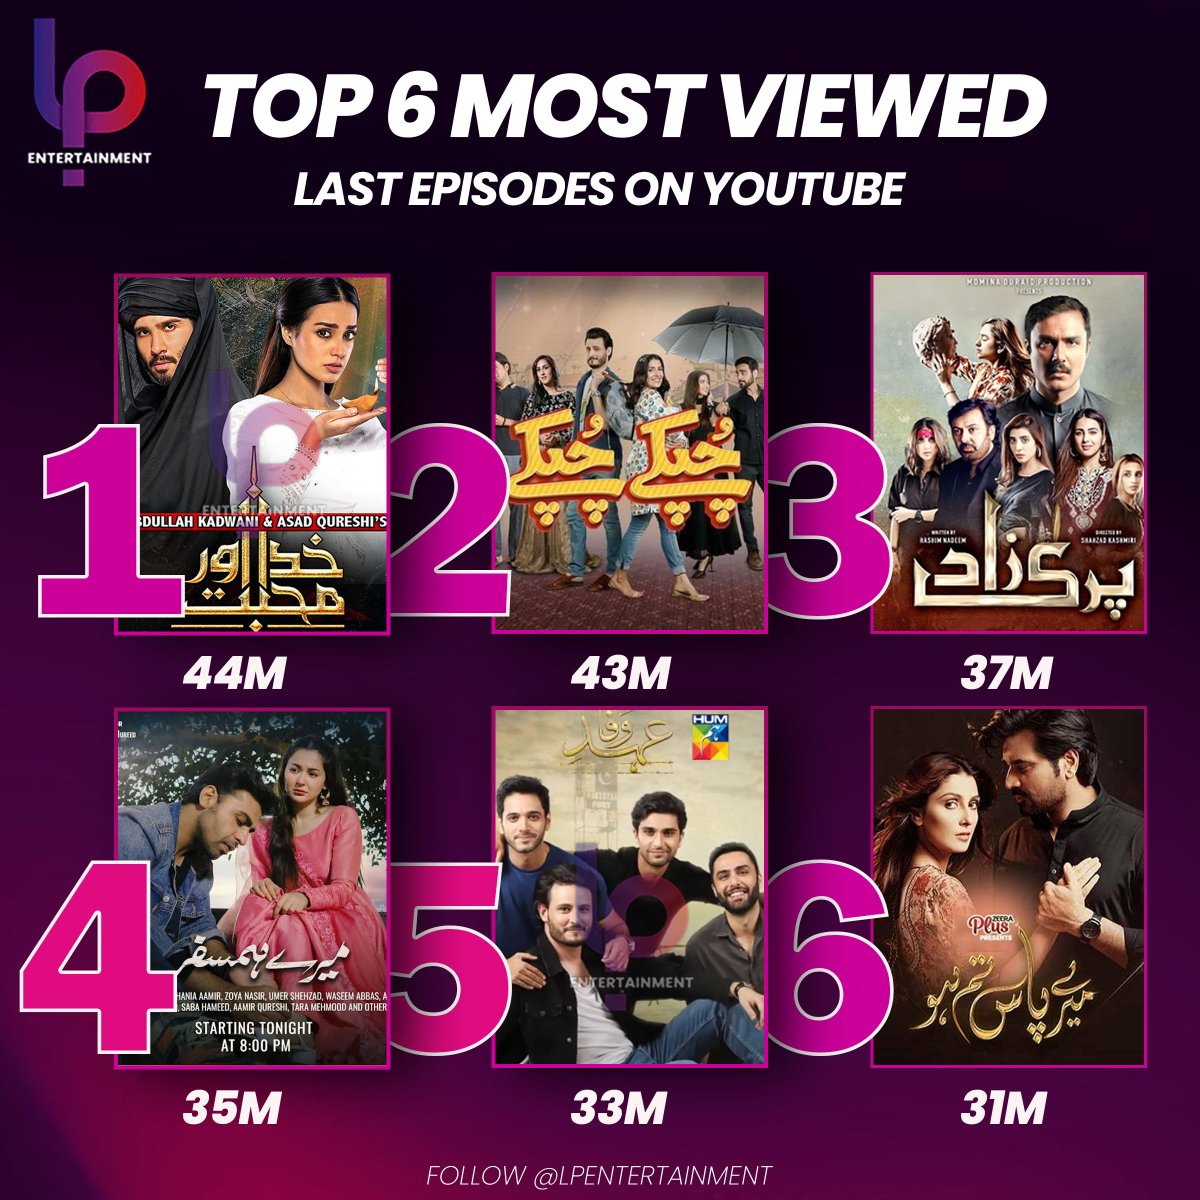 Here are the Top 6 #PakistaniDramas with the most viewed last episodes!

What's your favorite among these?
#KhudaAurMohabbat 
#ChupkeChupke 
#Parizad 
#MereHamsafar
#EhdEWafa
#MerePassTumHo

#FerozeKhan #FarhanSaeed #AhmedAliAkbar #WahajAli #HumayunSaeed #IqraAziz #AyezaKhan